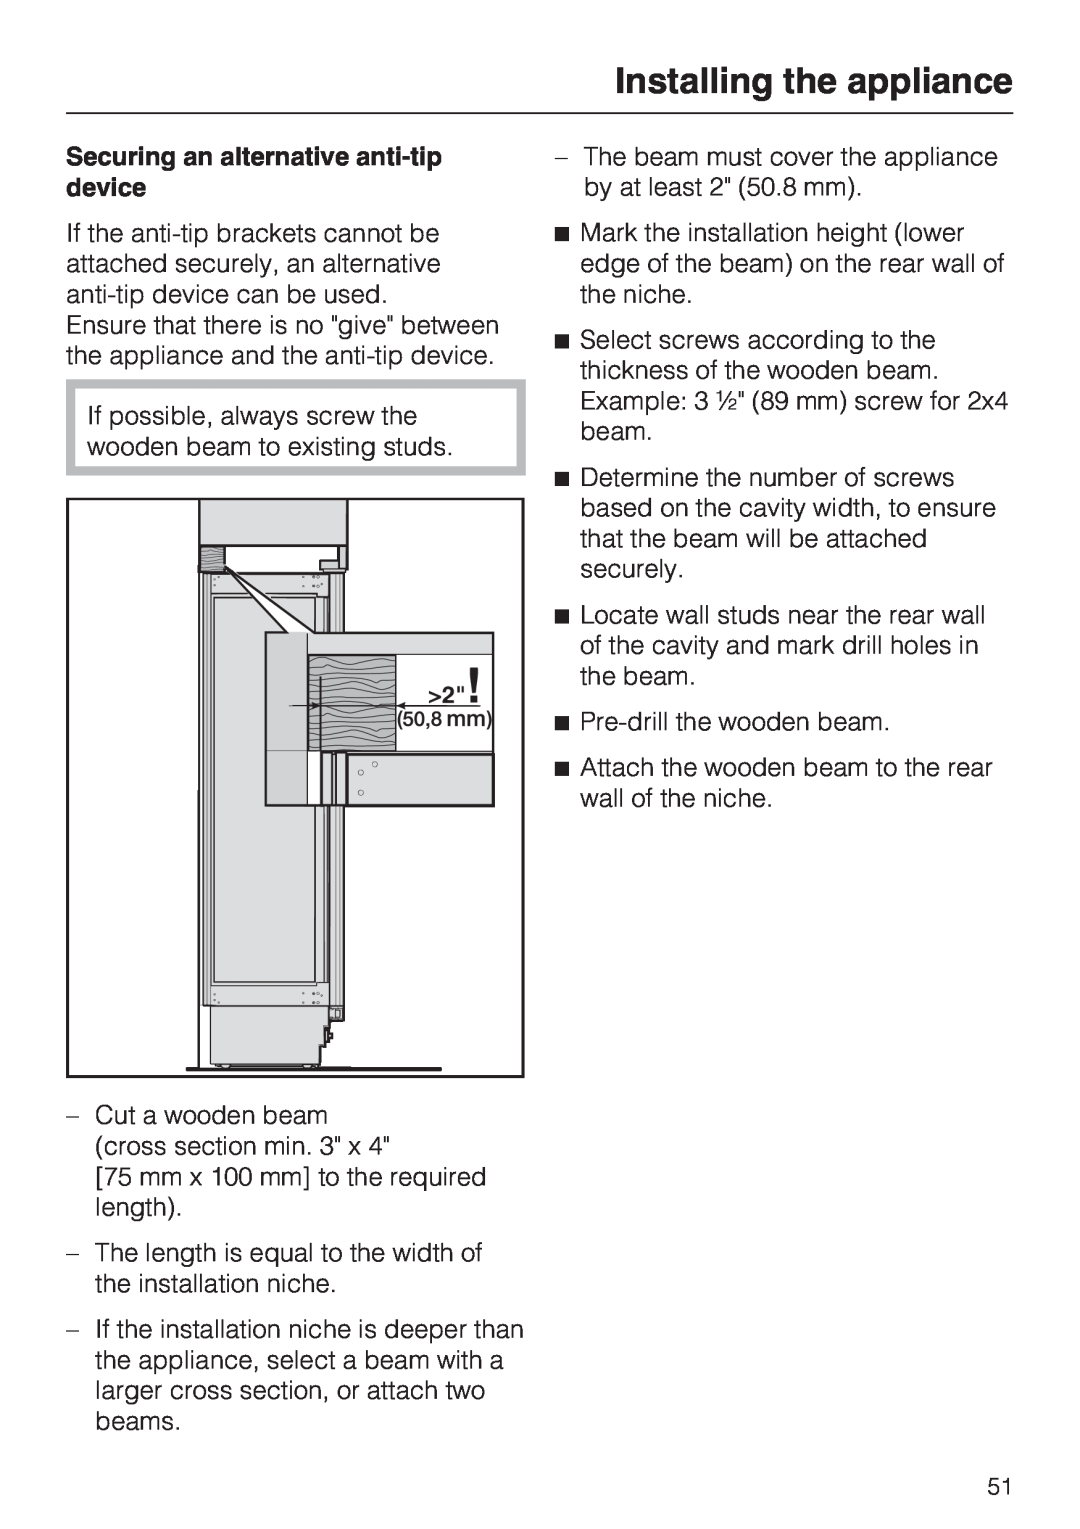 Miele K 1811 Vi, K 1911 Vi, K 1901 Vi, K 1801 Vi Installing the appliance, Securing an alternative anti-tipdevice 